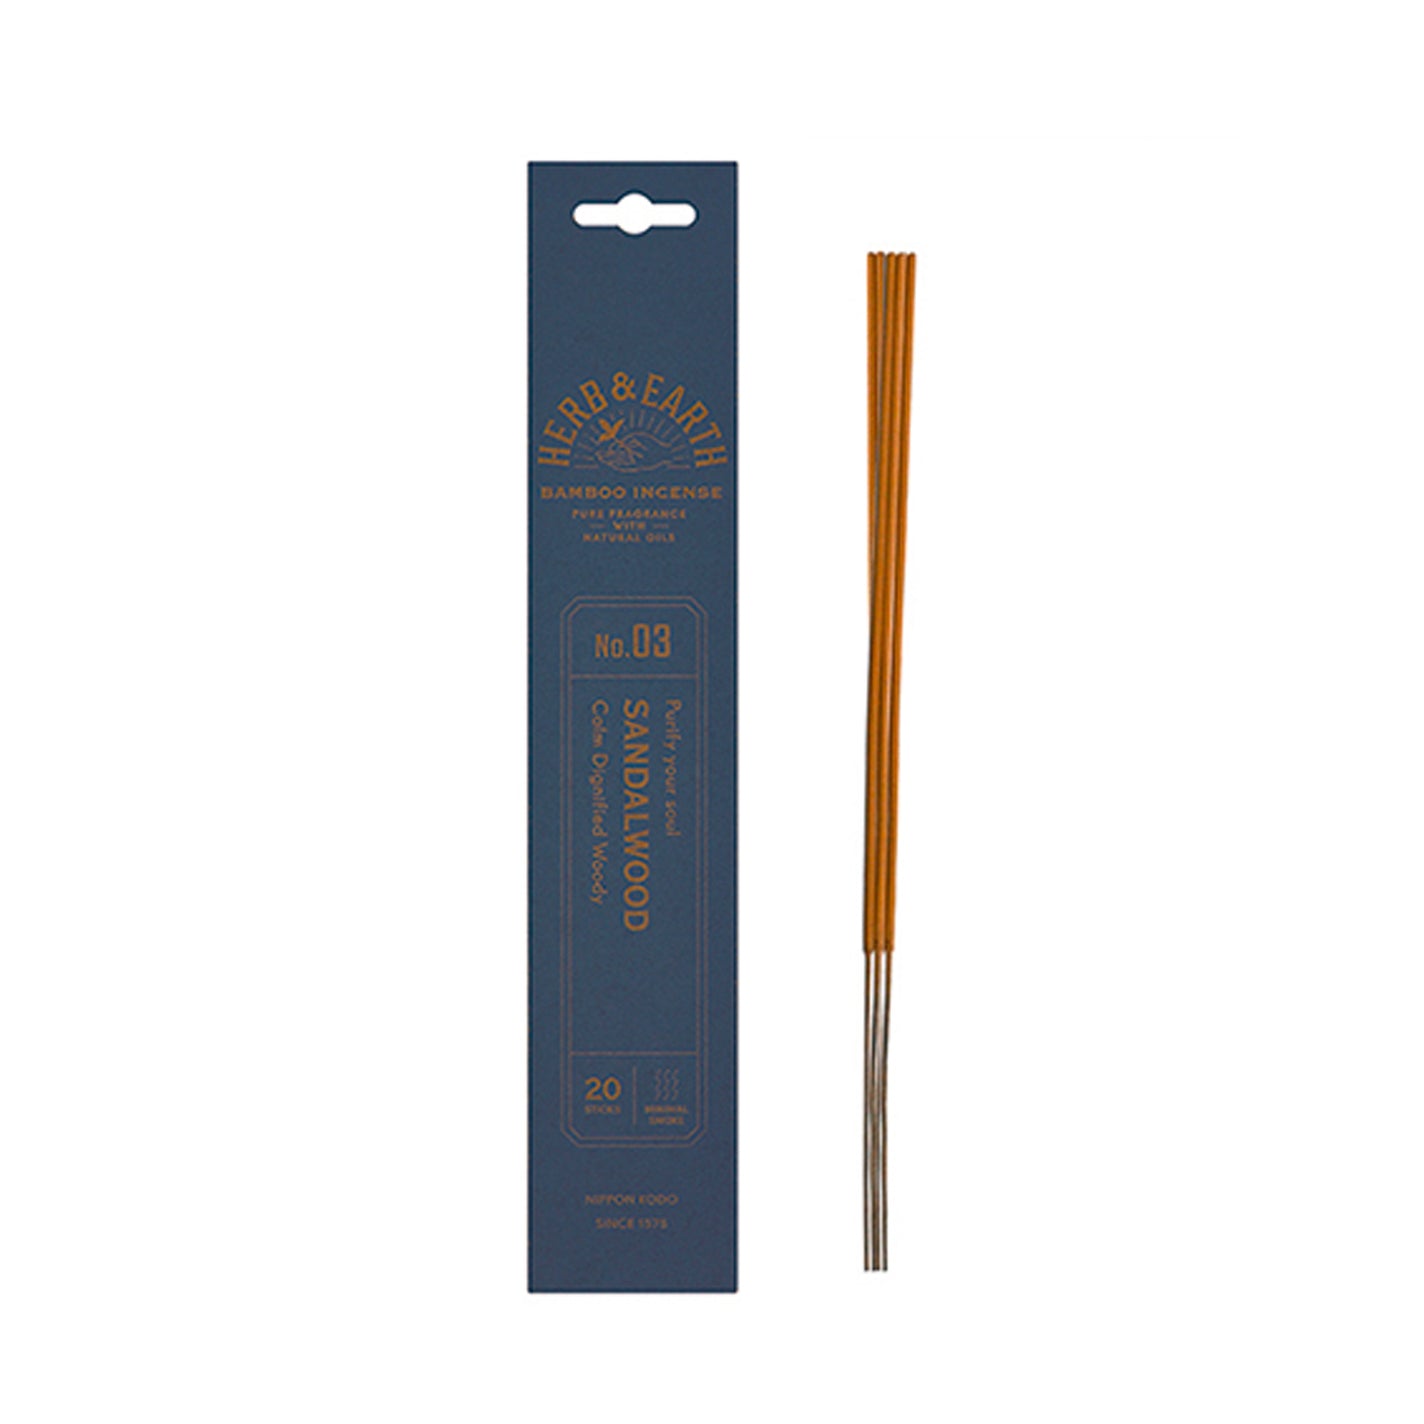 Nippon Kodo Herb & Earth Incense - Sandalwood No.03